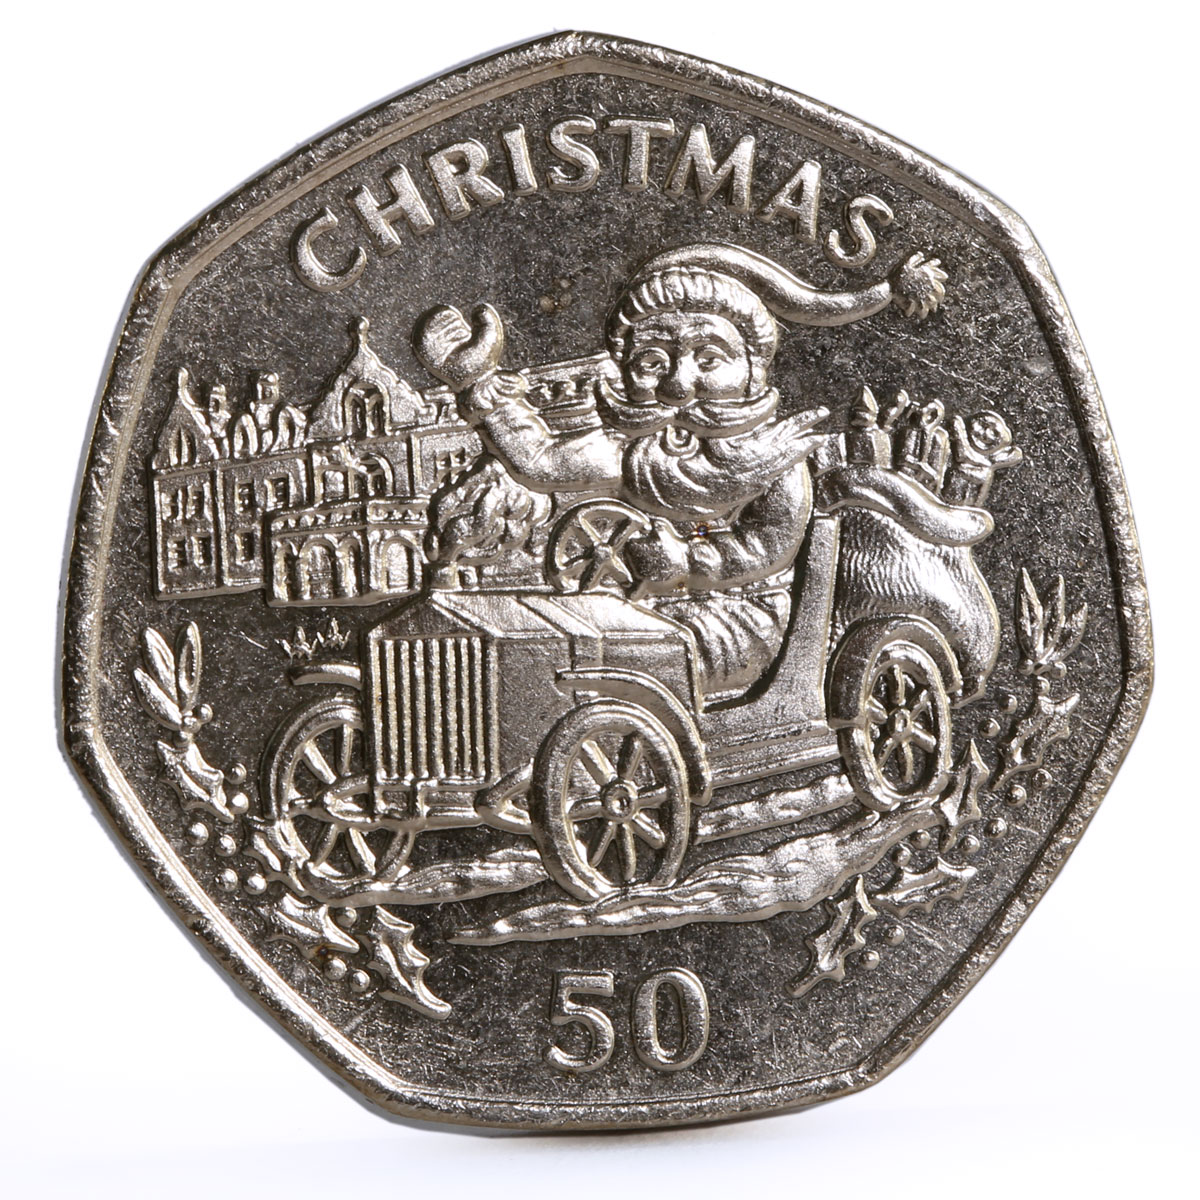 Gibraltar 50 pence Holidays Saints Christmas Santa Claus in a Car CuNi coin 1993